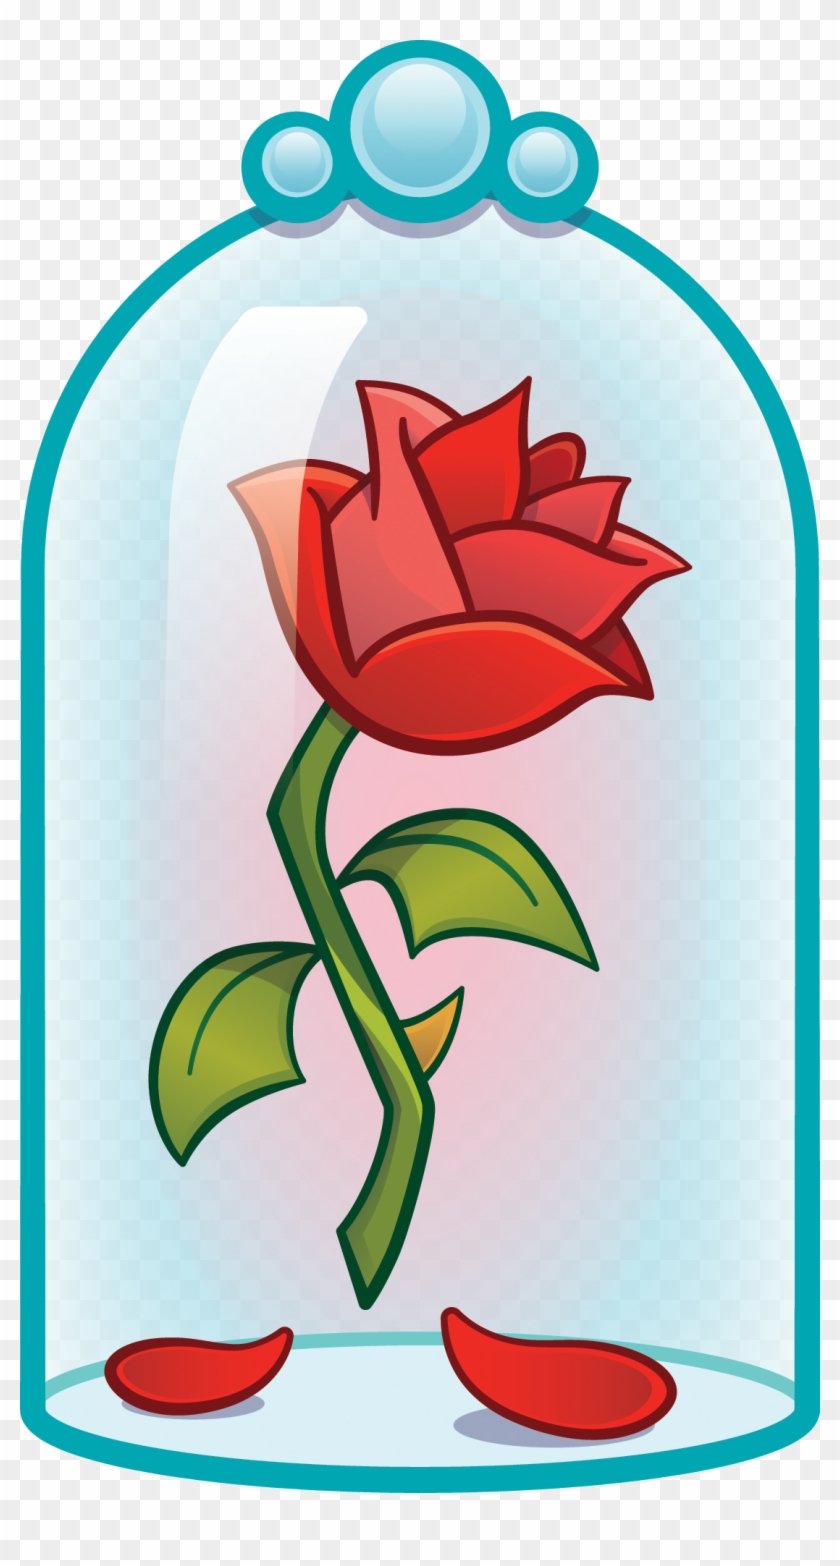 Disney's Emoji - Cartoon Beauty And The Beast Flower Clipart #697746